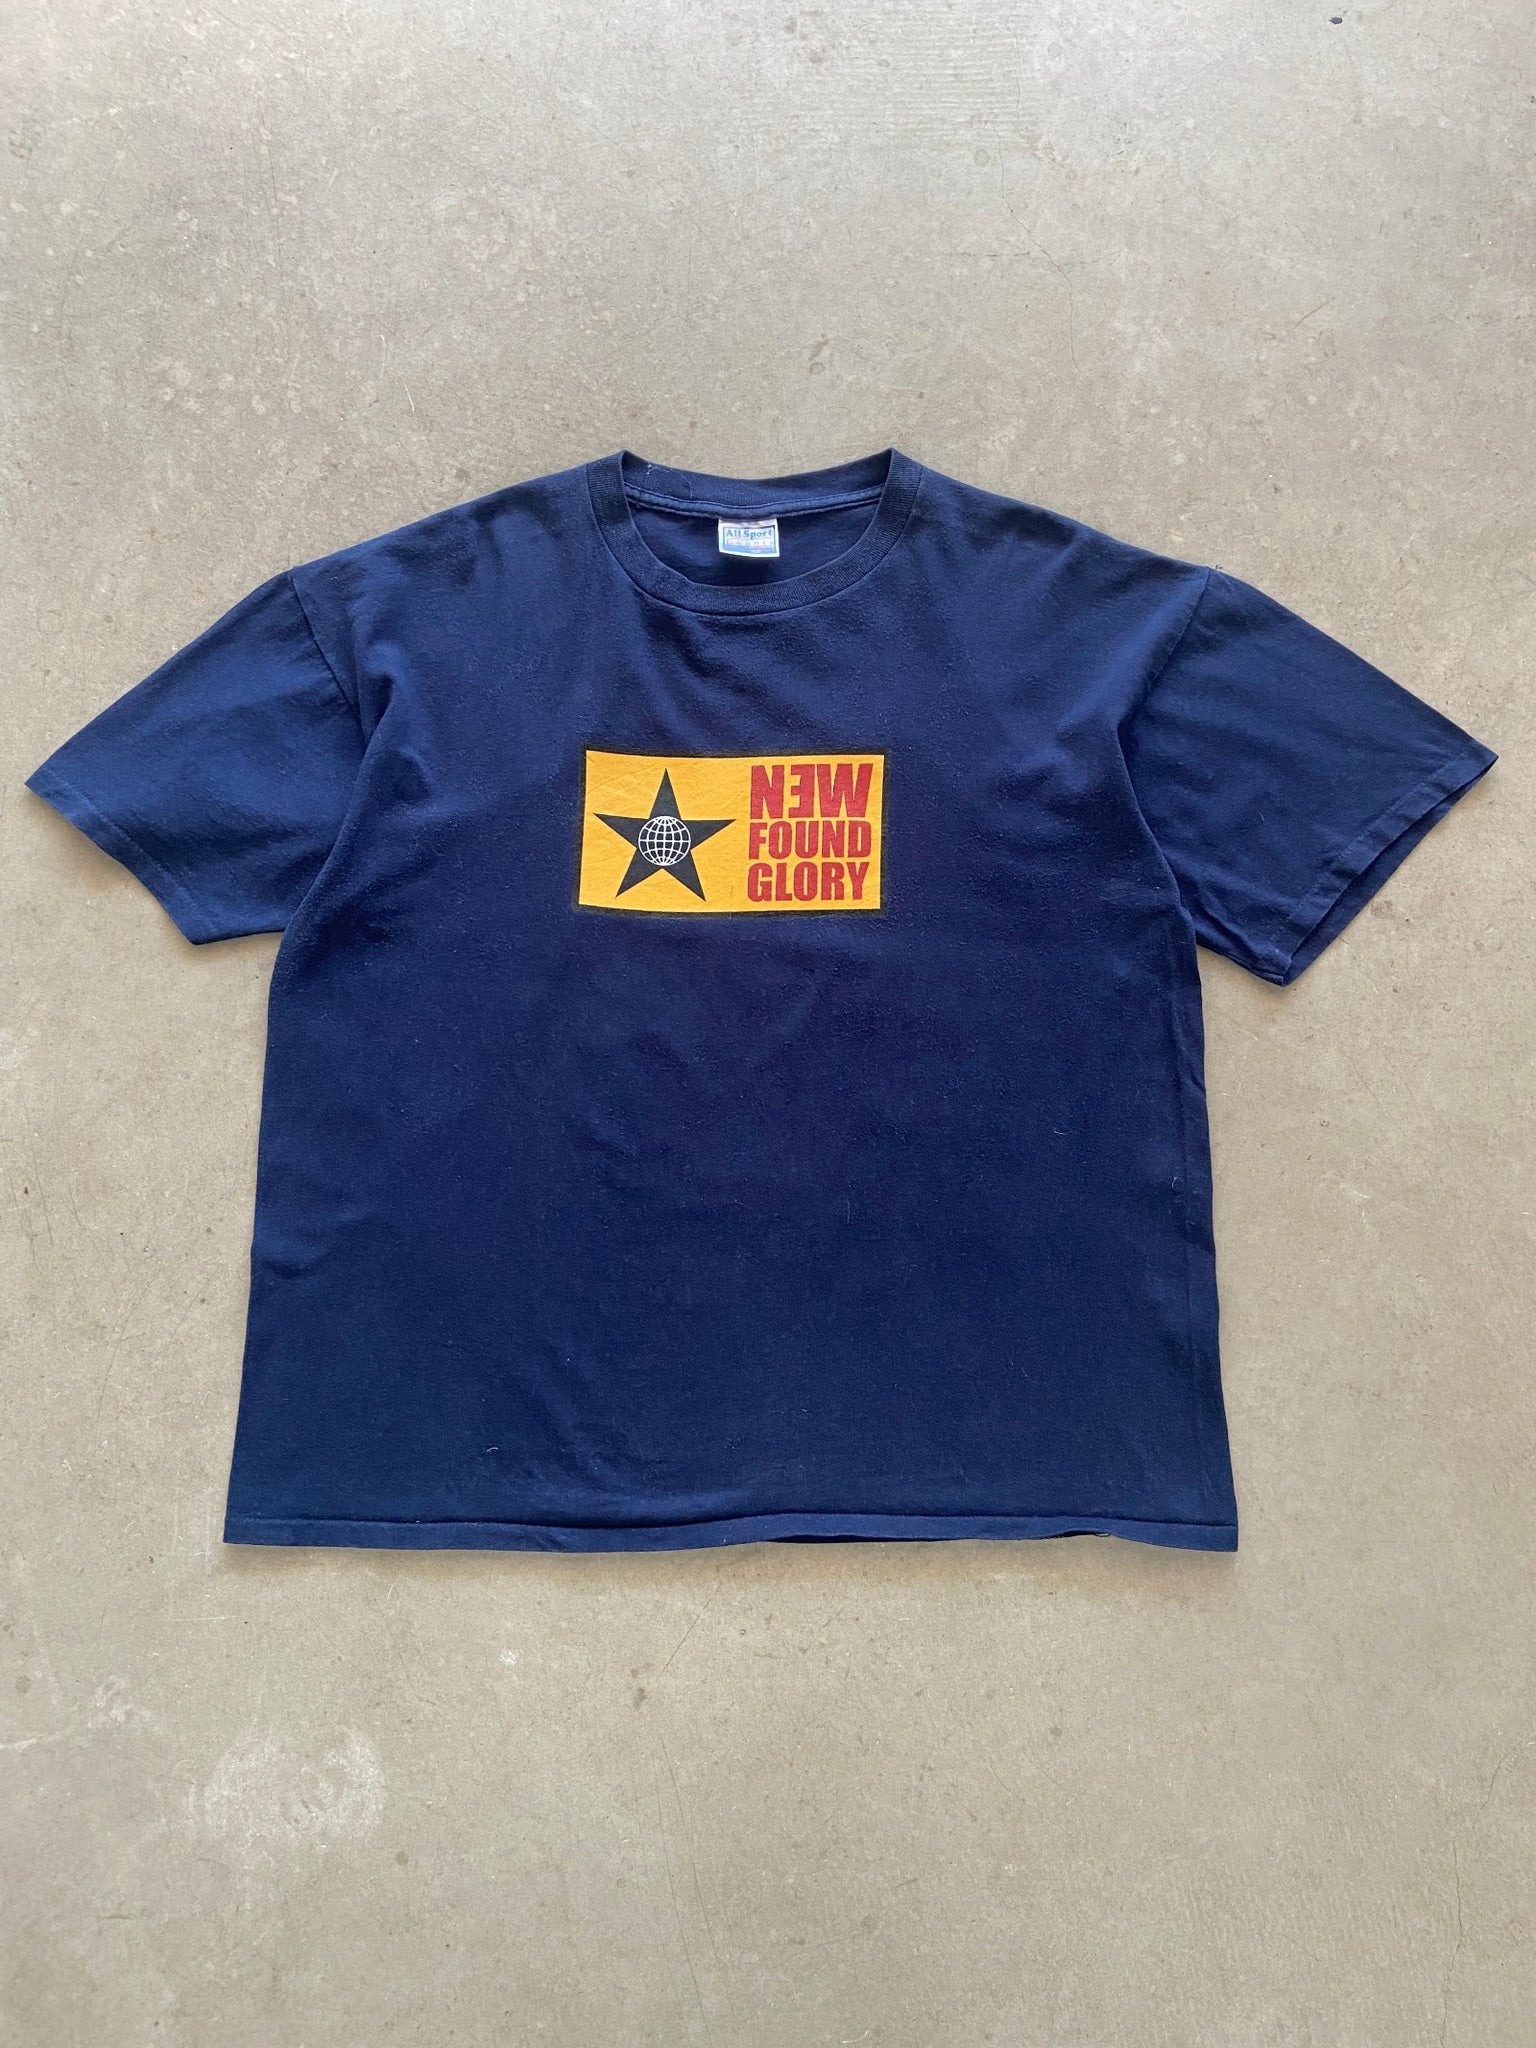 2001 New Found Glory T-Shirt - XL